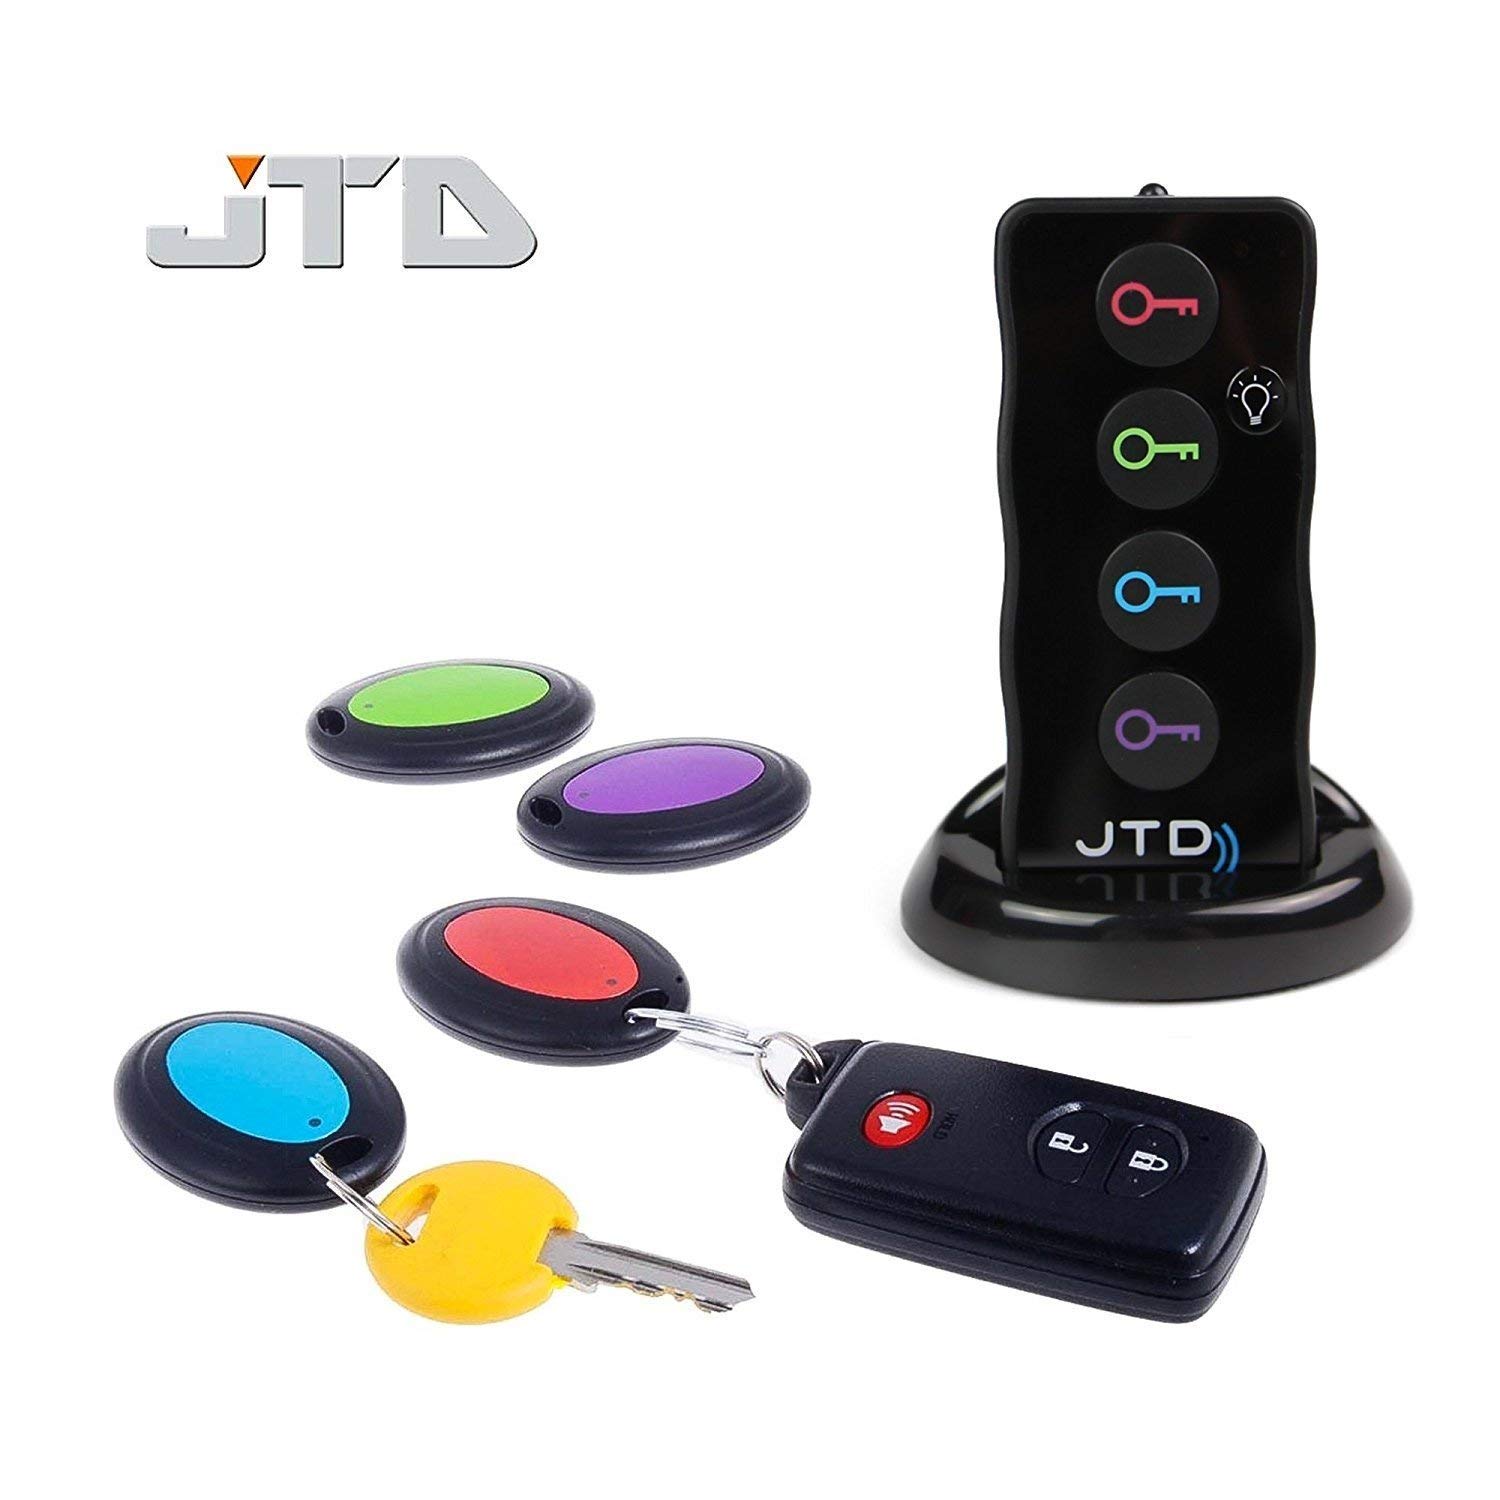 Tiny GPS tracking device - JTD Wireless RF Item Locator